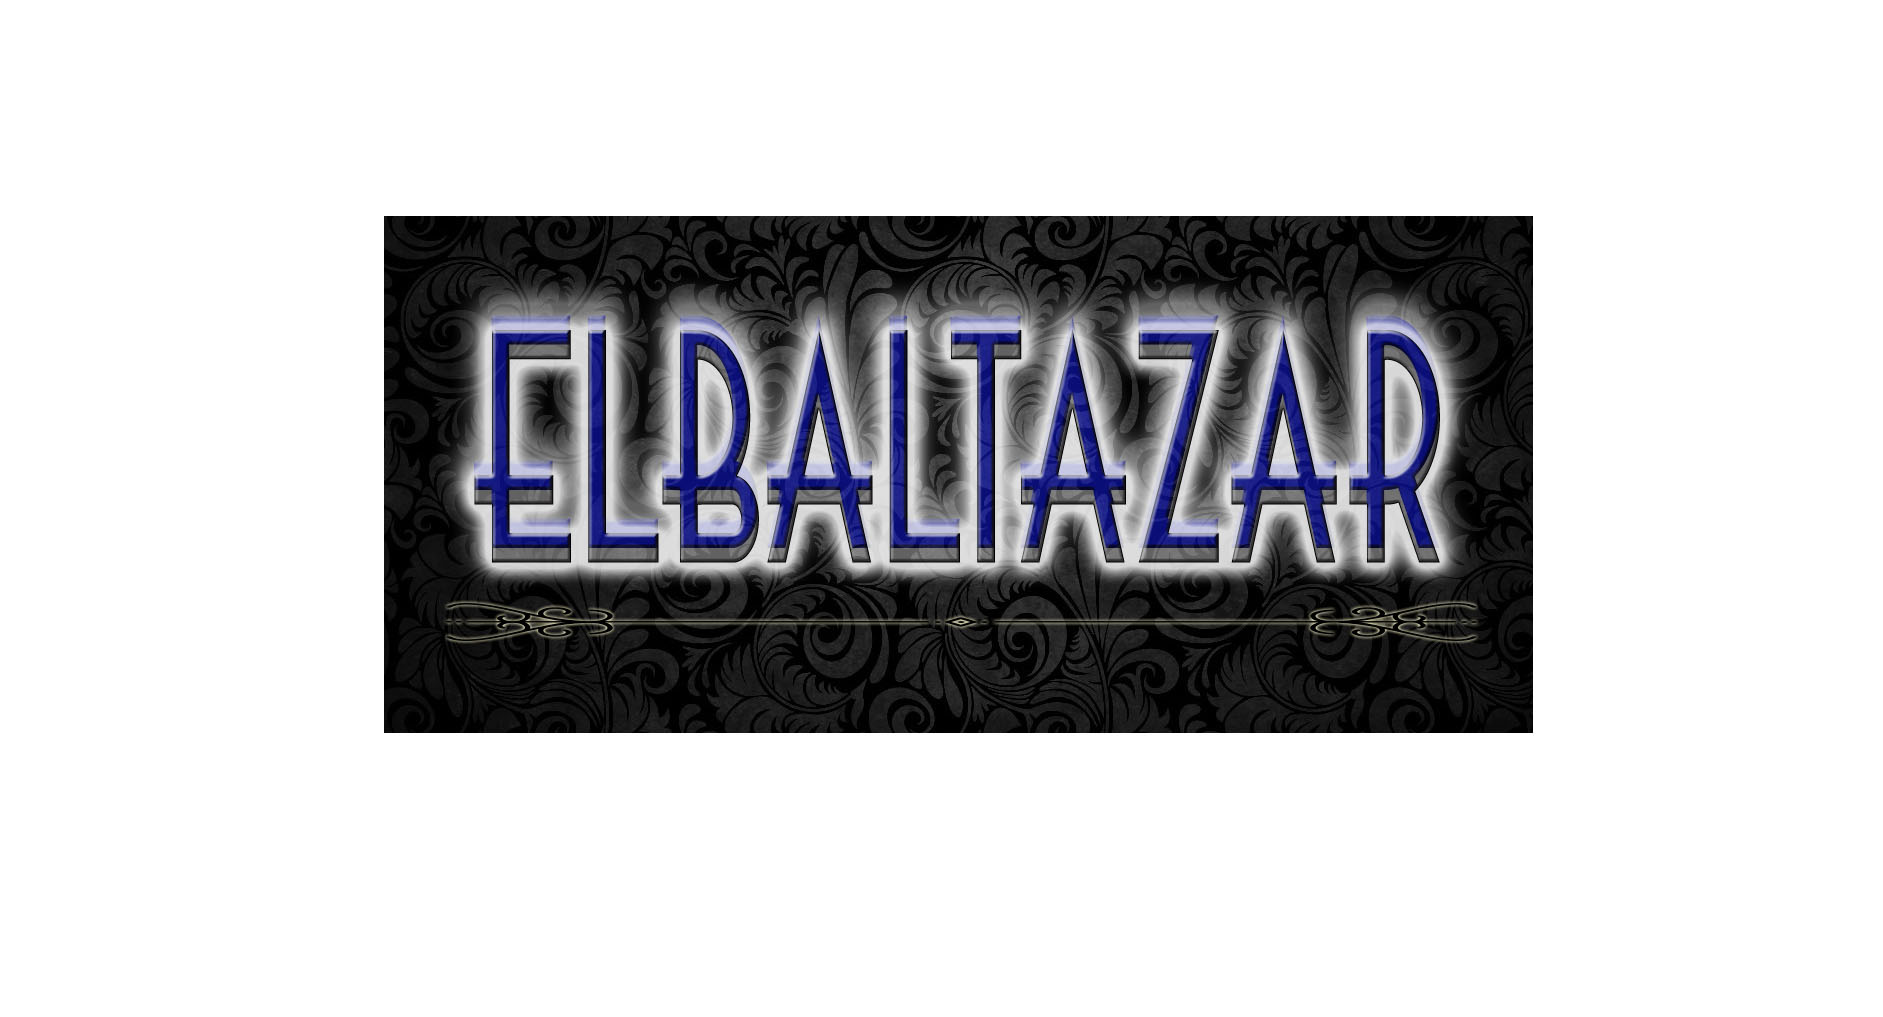 Elbaltazar